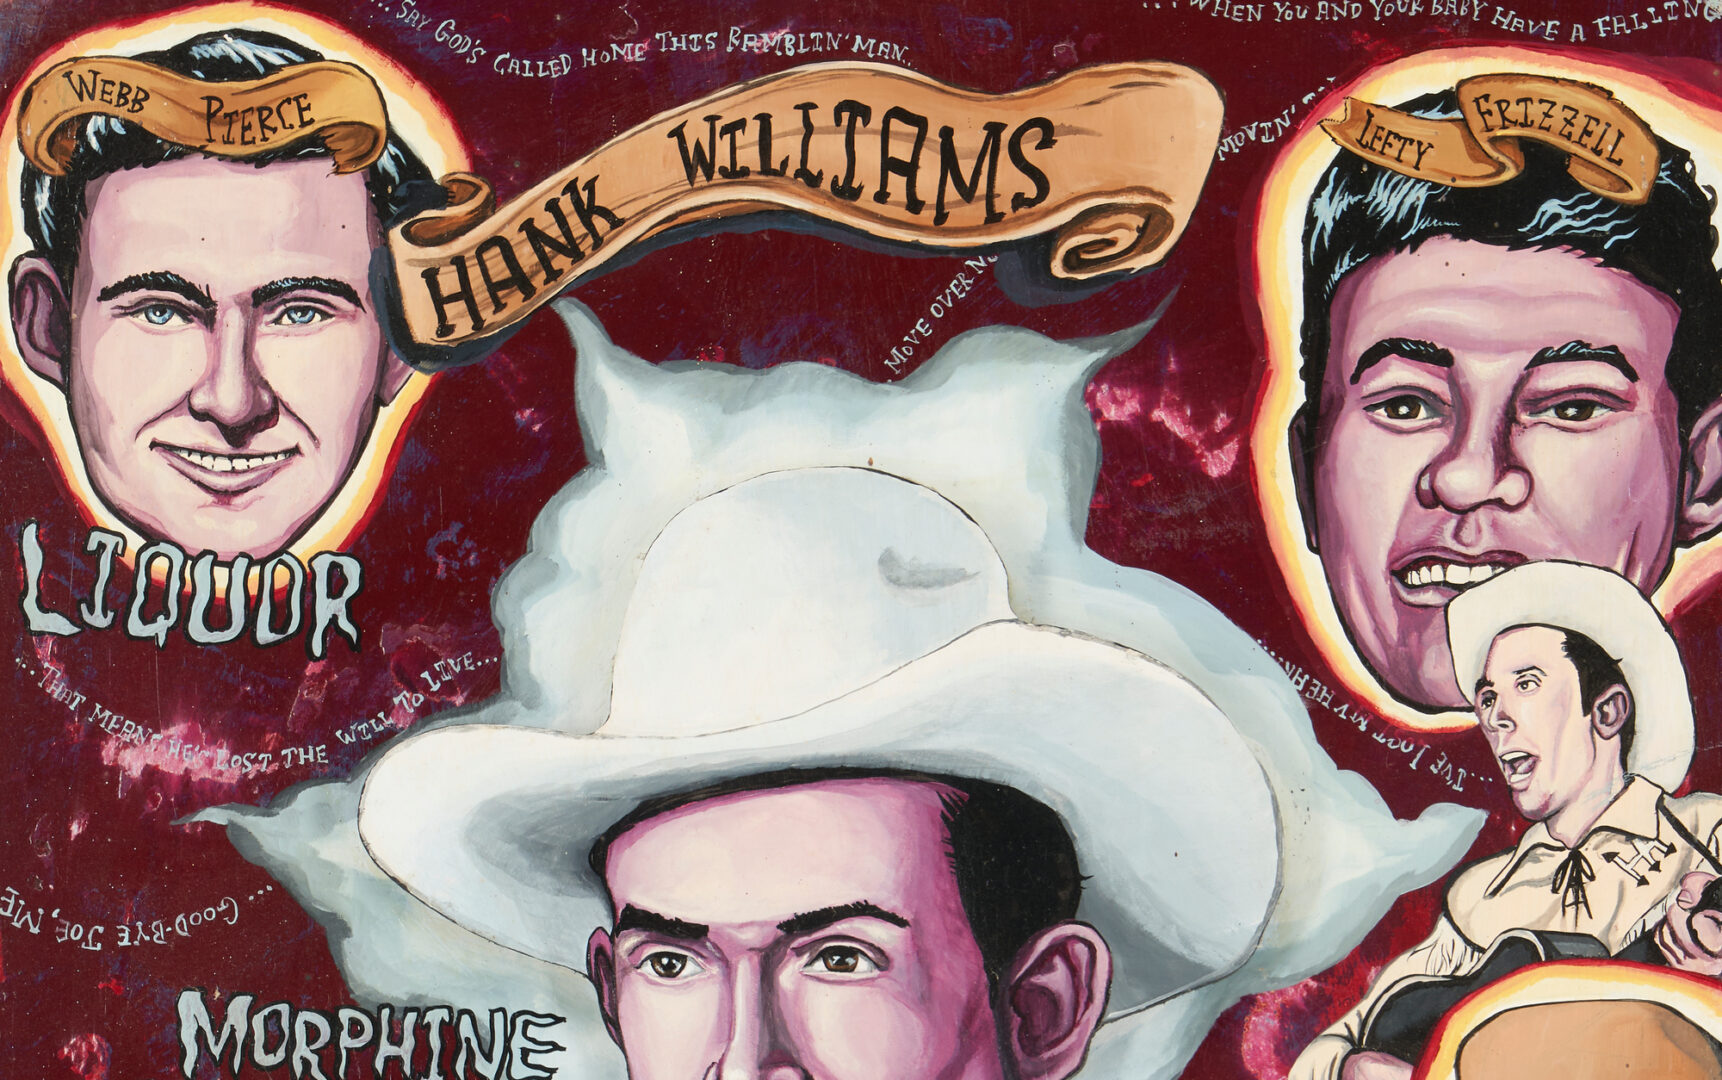 Lot 867: Mr. Hooper Outsider Art Painting, Tribute to Hank Williams